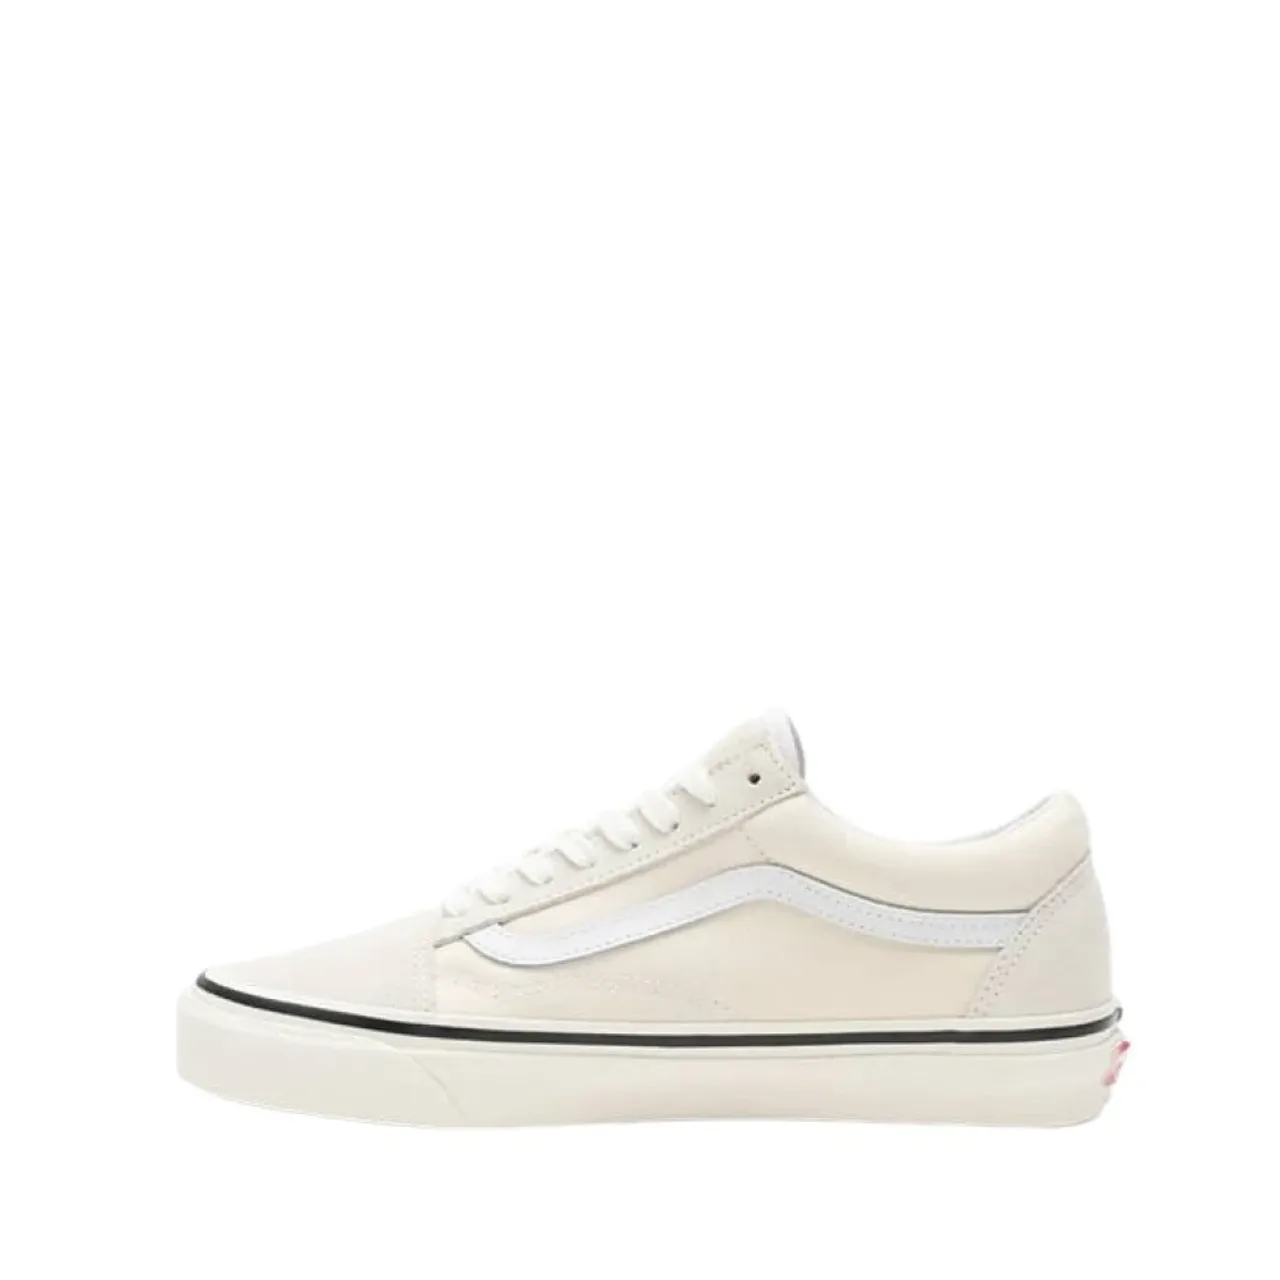 Creamy/White Anonymo Sneakers Vans